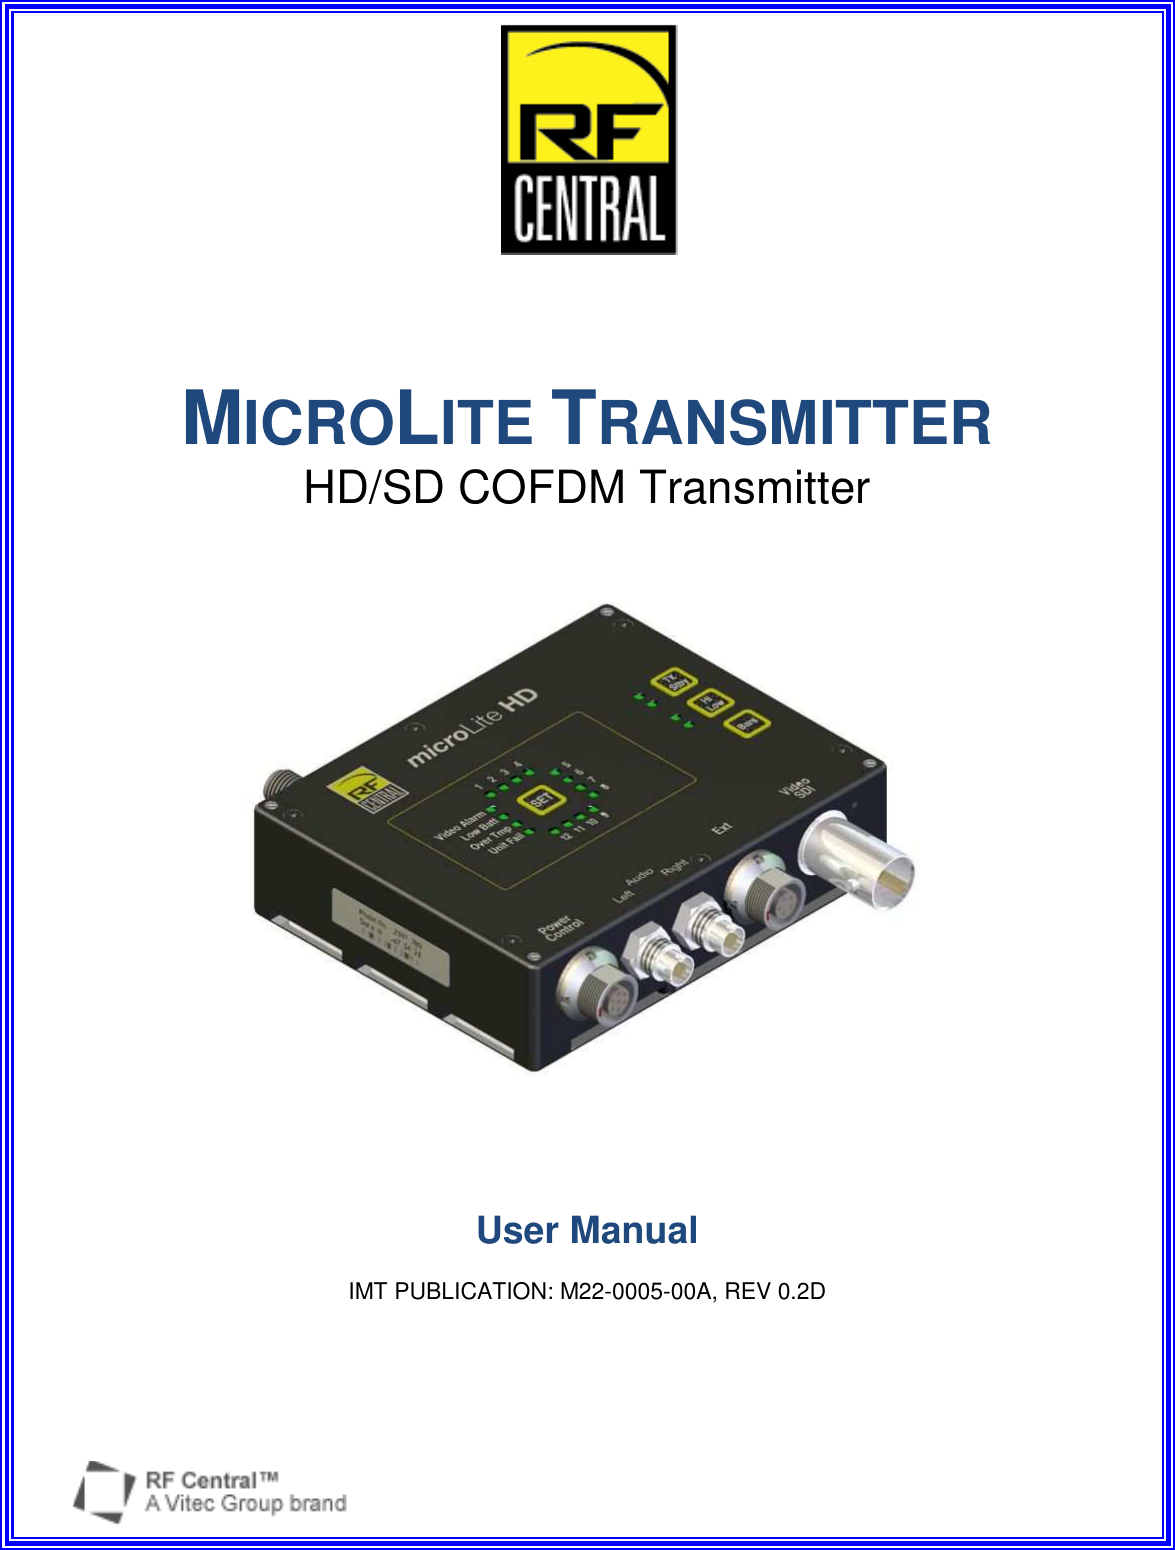        MICROLITE TRANSMITTER HD/SD COFDM Transmitter         User Manual  IMT PUBLICATION: M22-0005-00A, REV 0.2D   